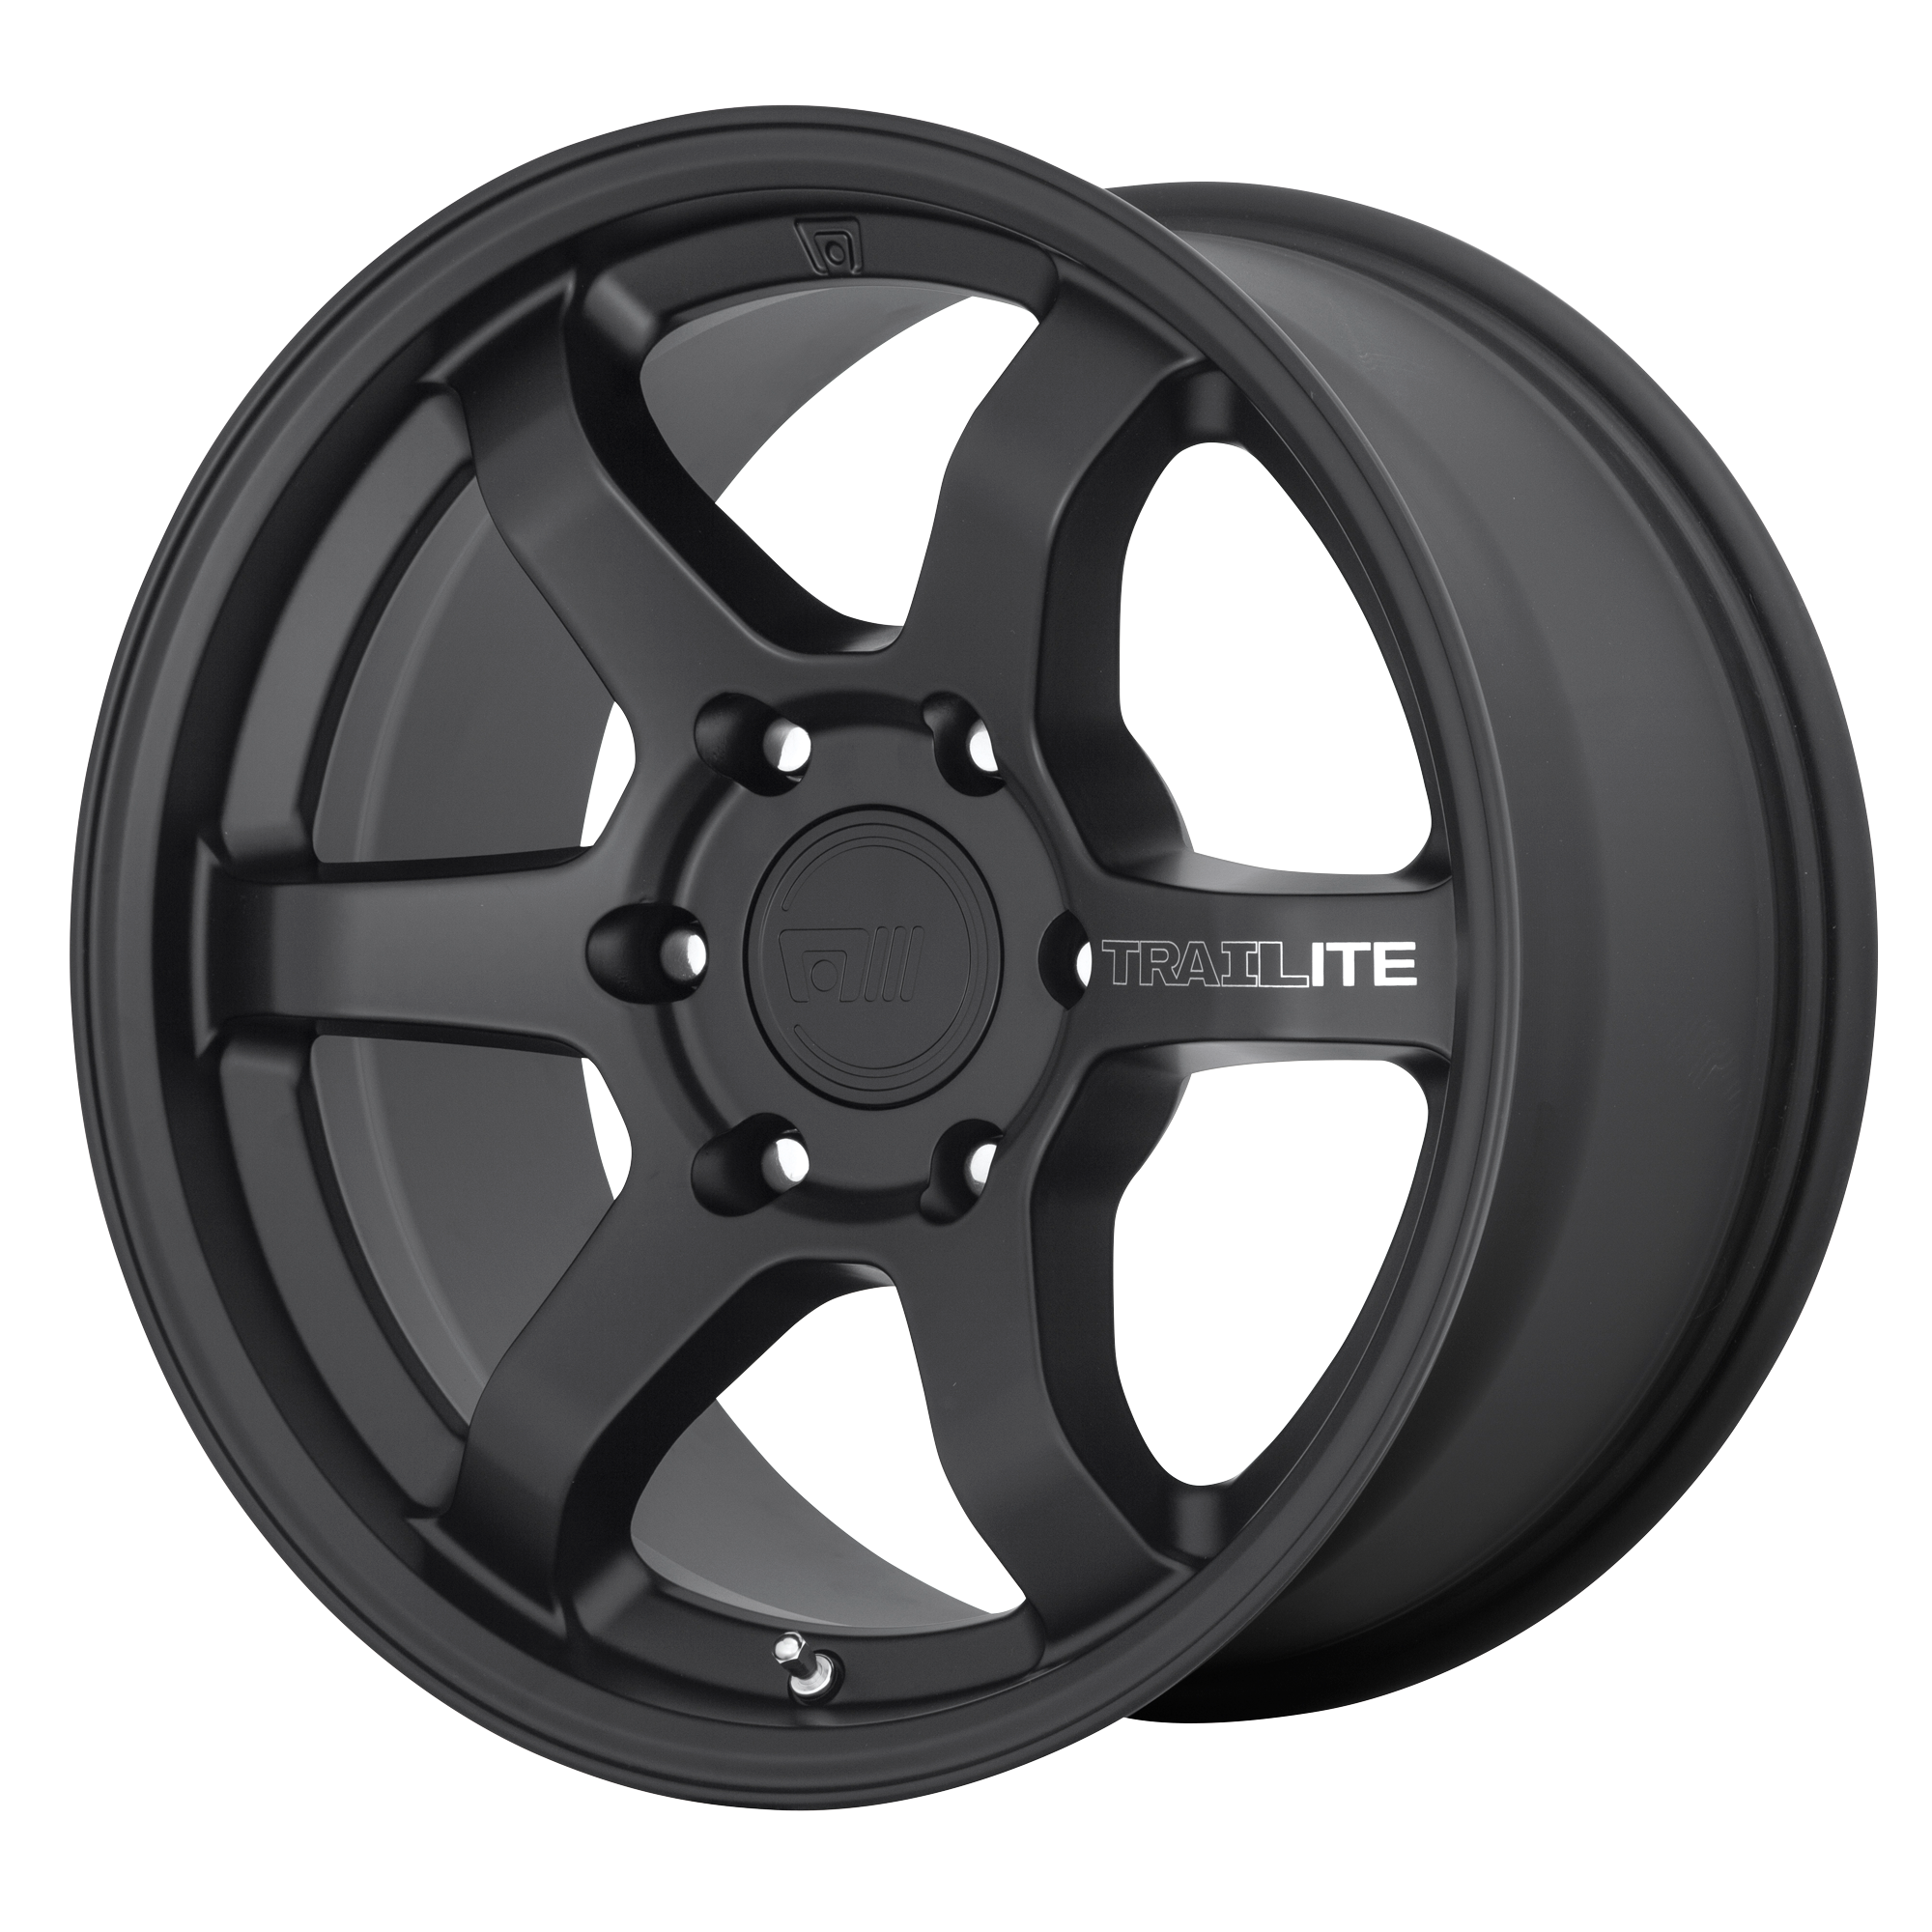 TRAILITE 17x8.5 5x127.00 SATIN BLACK (18 mm) - Tires and Engine Performance